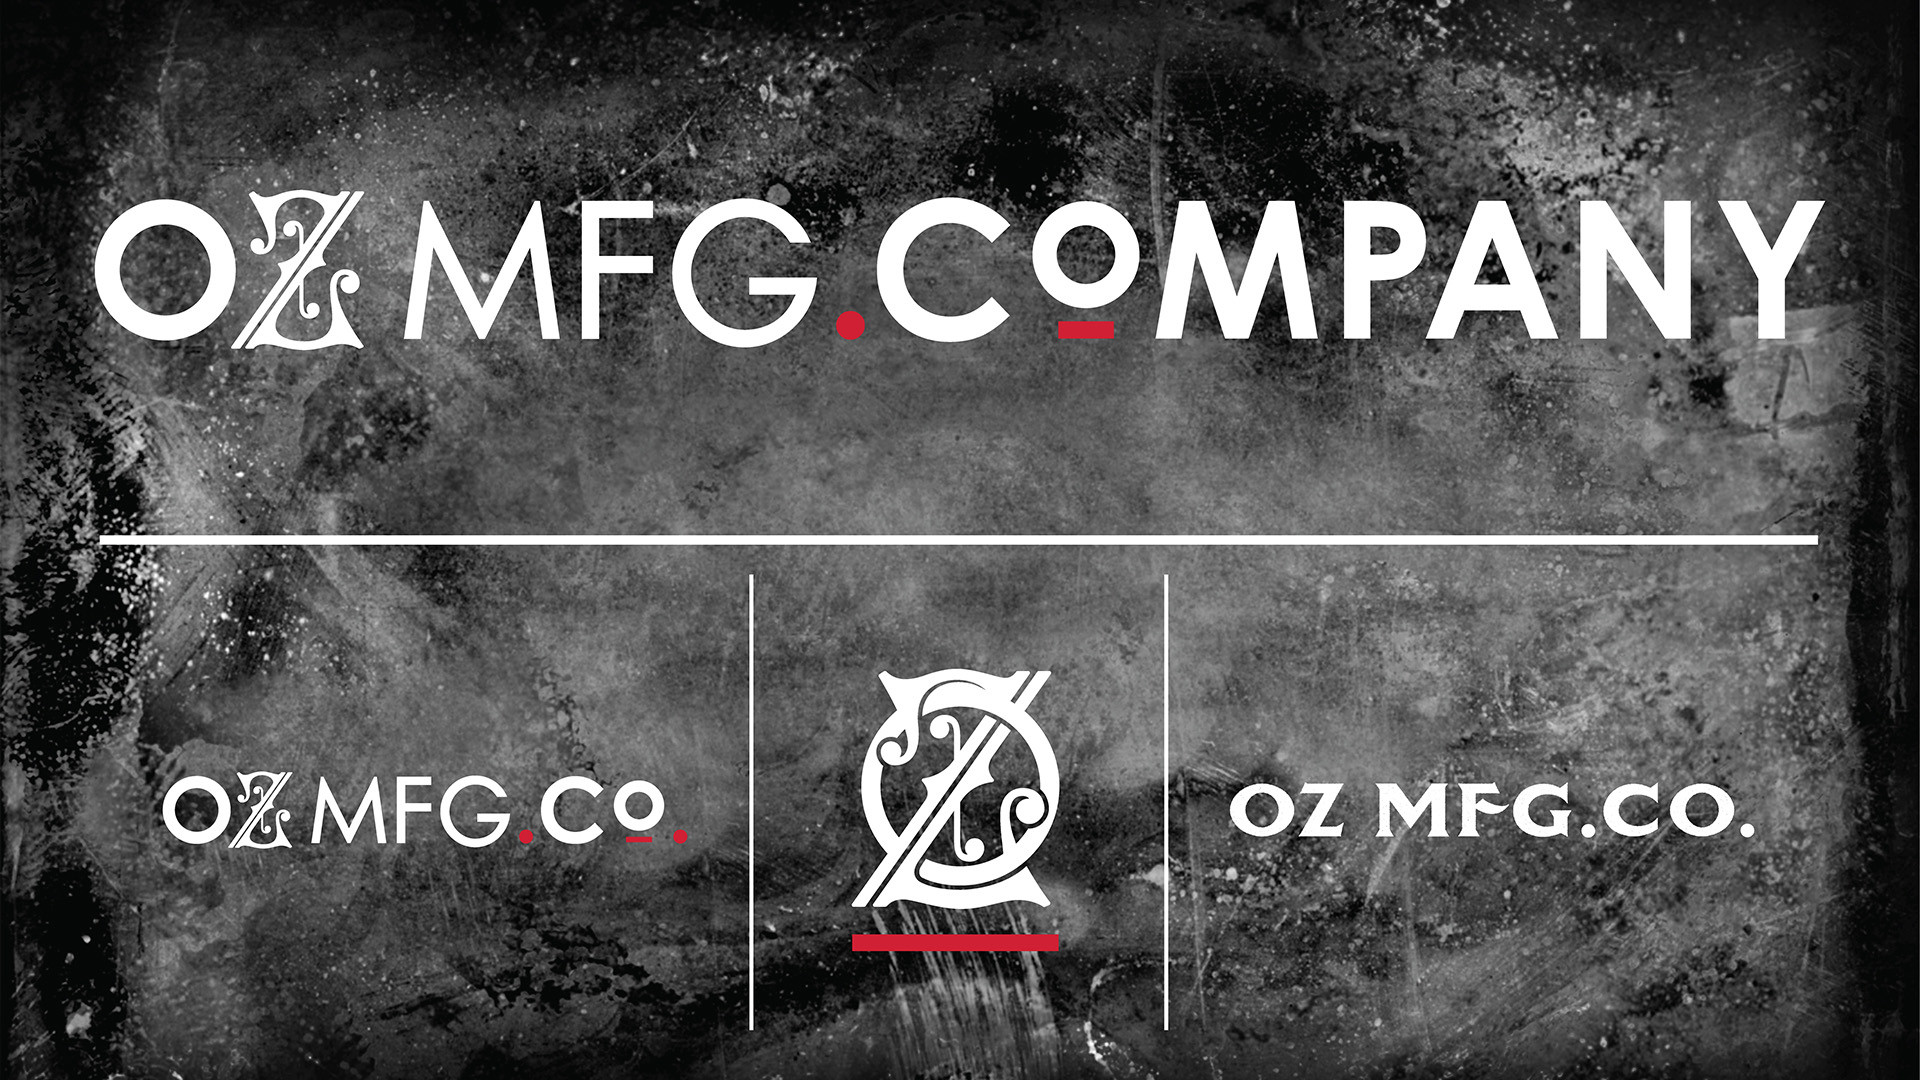 Oz Mfg. Company Logos Identity Design 01